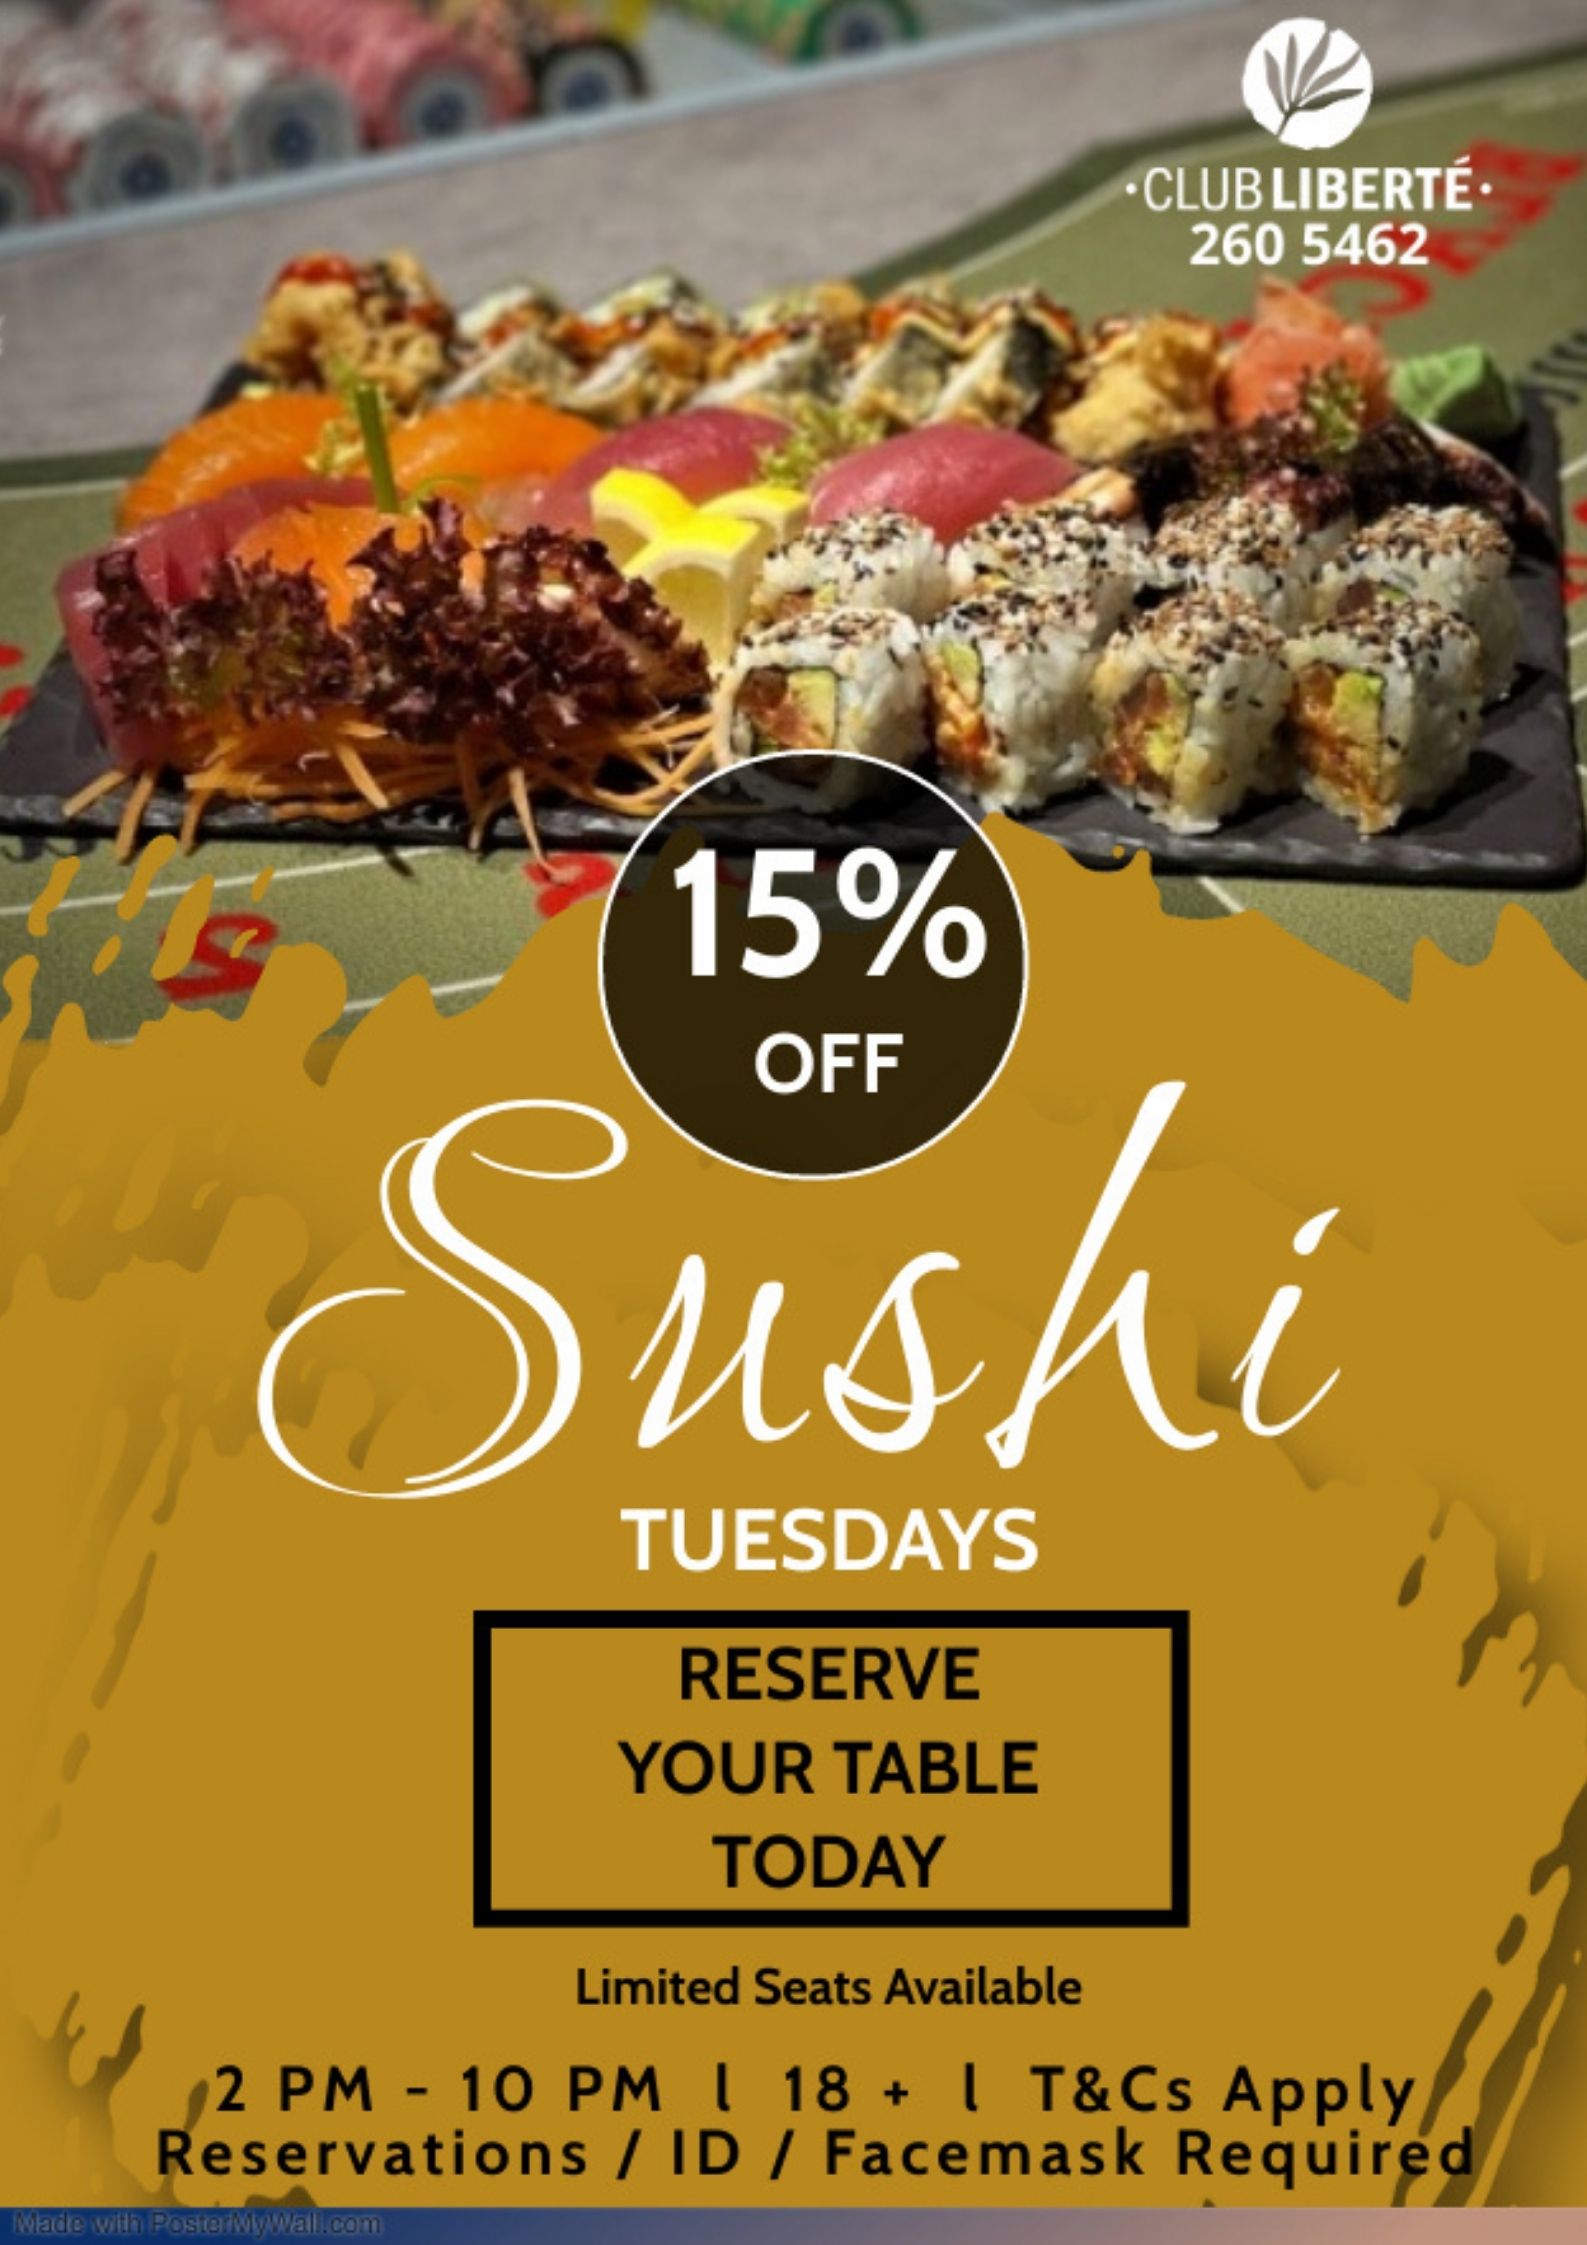 Sushi Tuesdays at Club Liberte — best Sushi in Seychelles